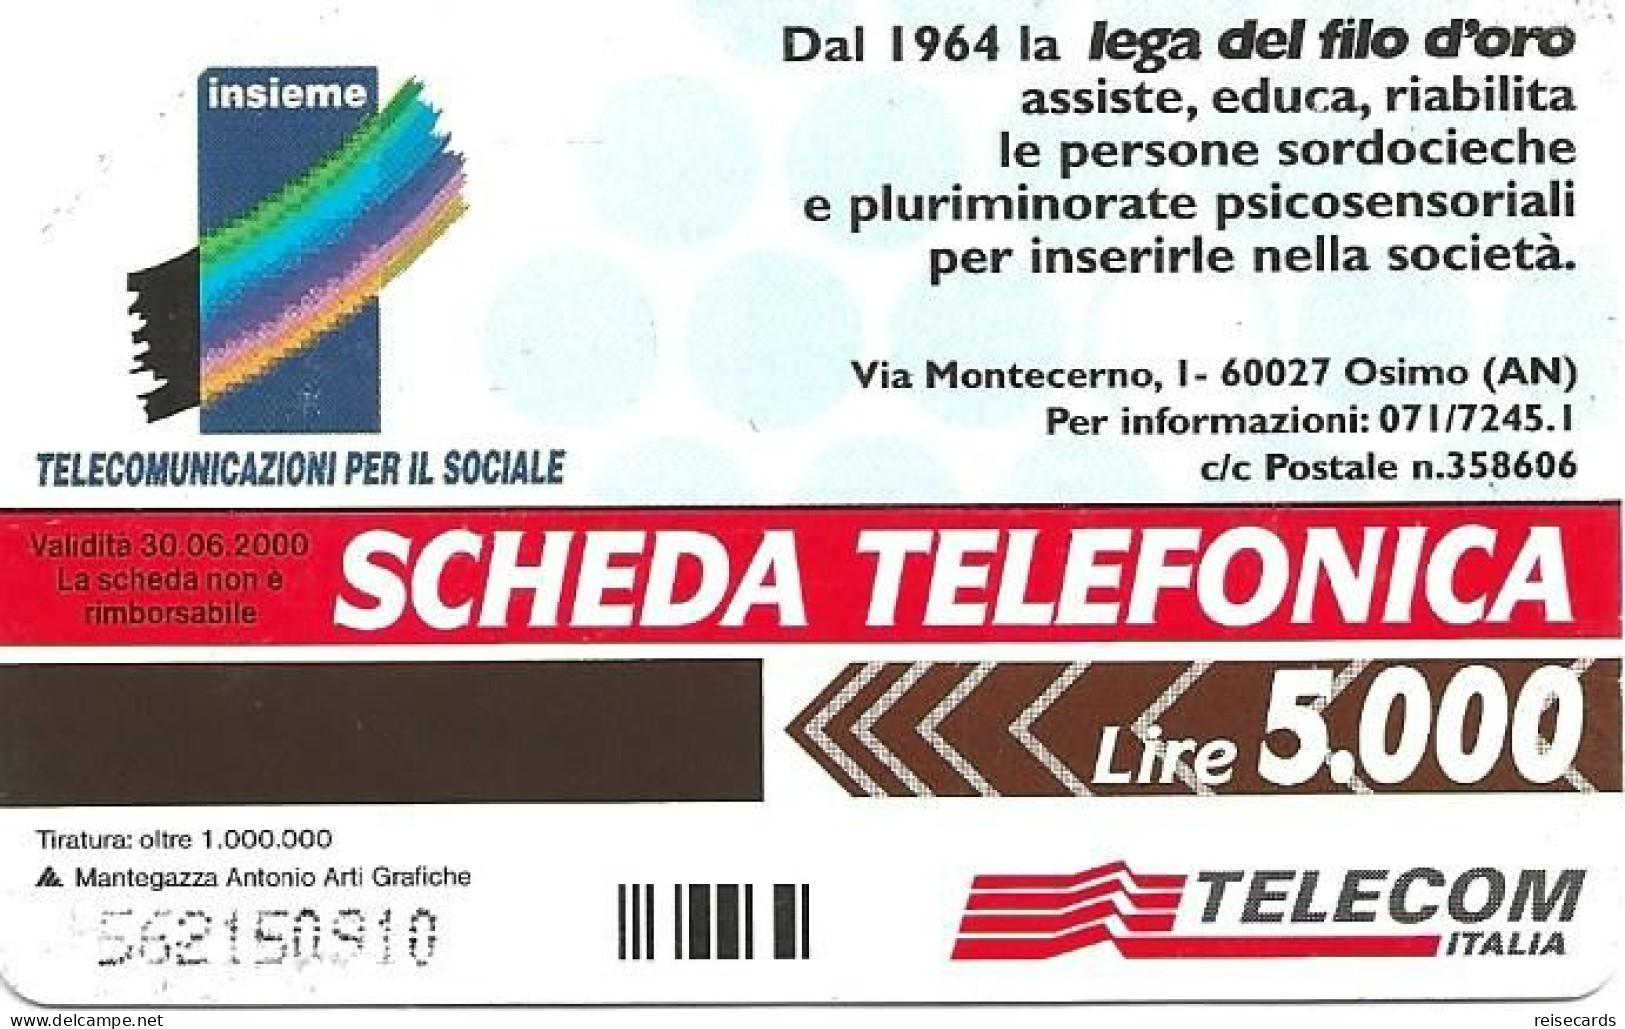 Italy: Telecom Italia - Lega Del Filo D'oro - Públicas  Publicitarias